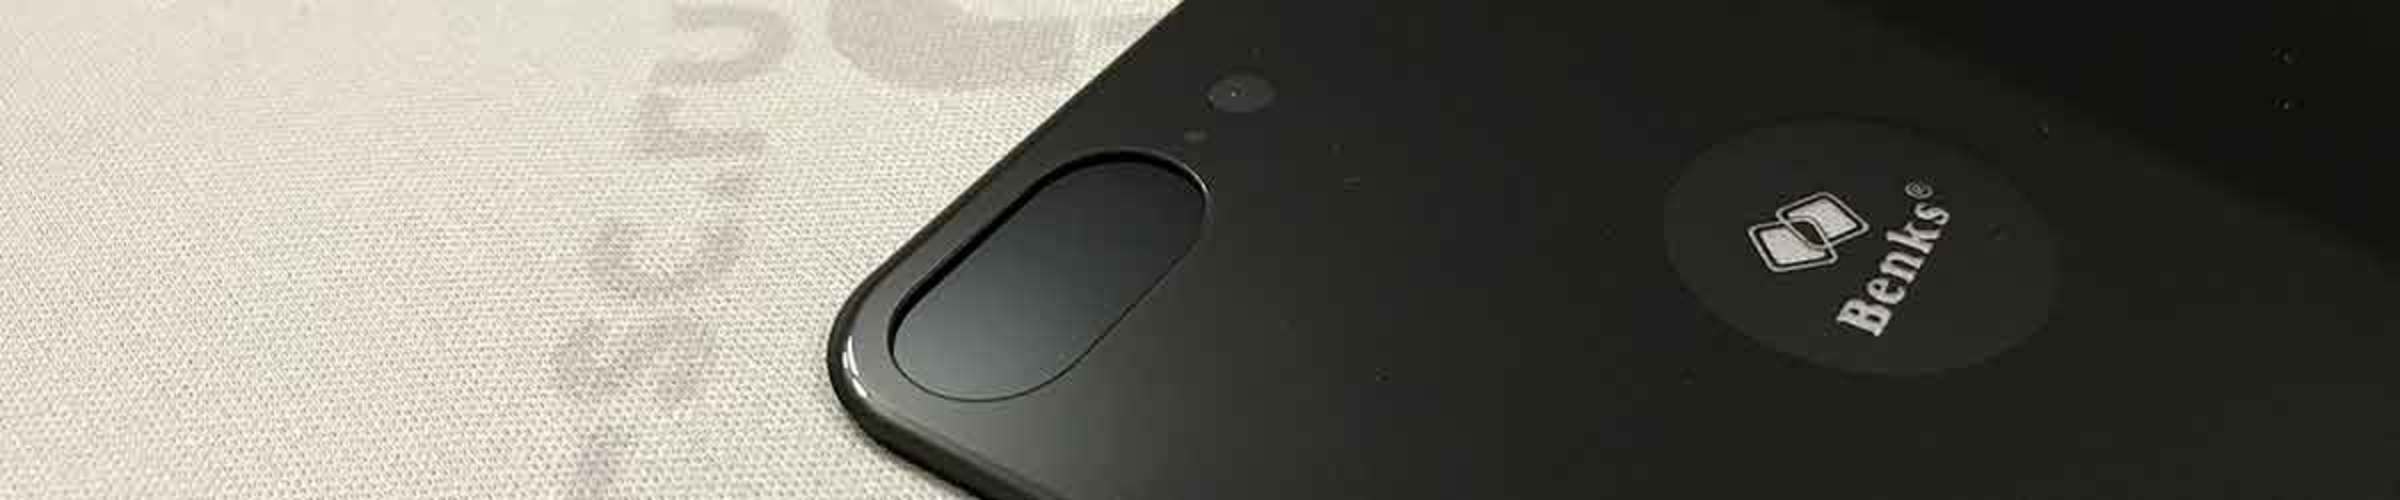 Обзор защитного стекла на заднюю панель iPhone 8 | 8 Plus: преимущества и характеристики